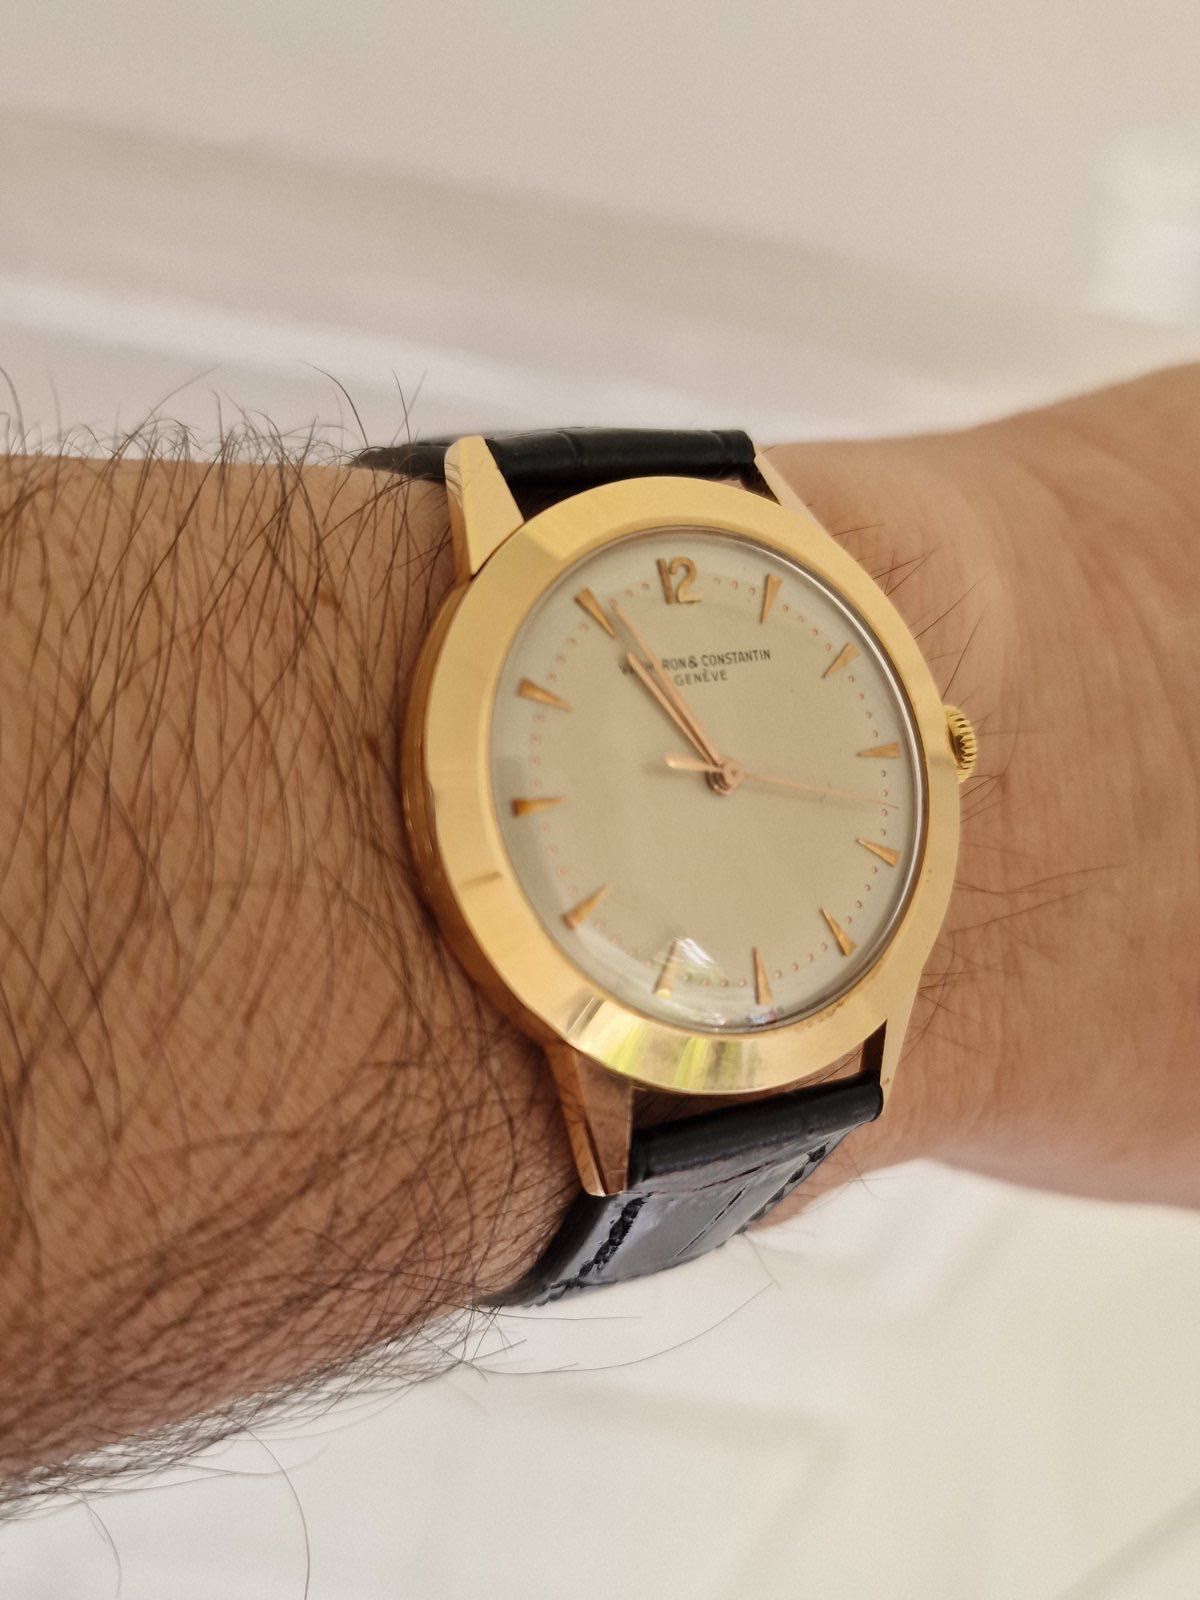 Vacheron Constantin 18к златен мъжки часовник от 50те. Jumbo версия